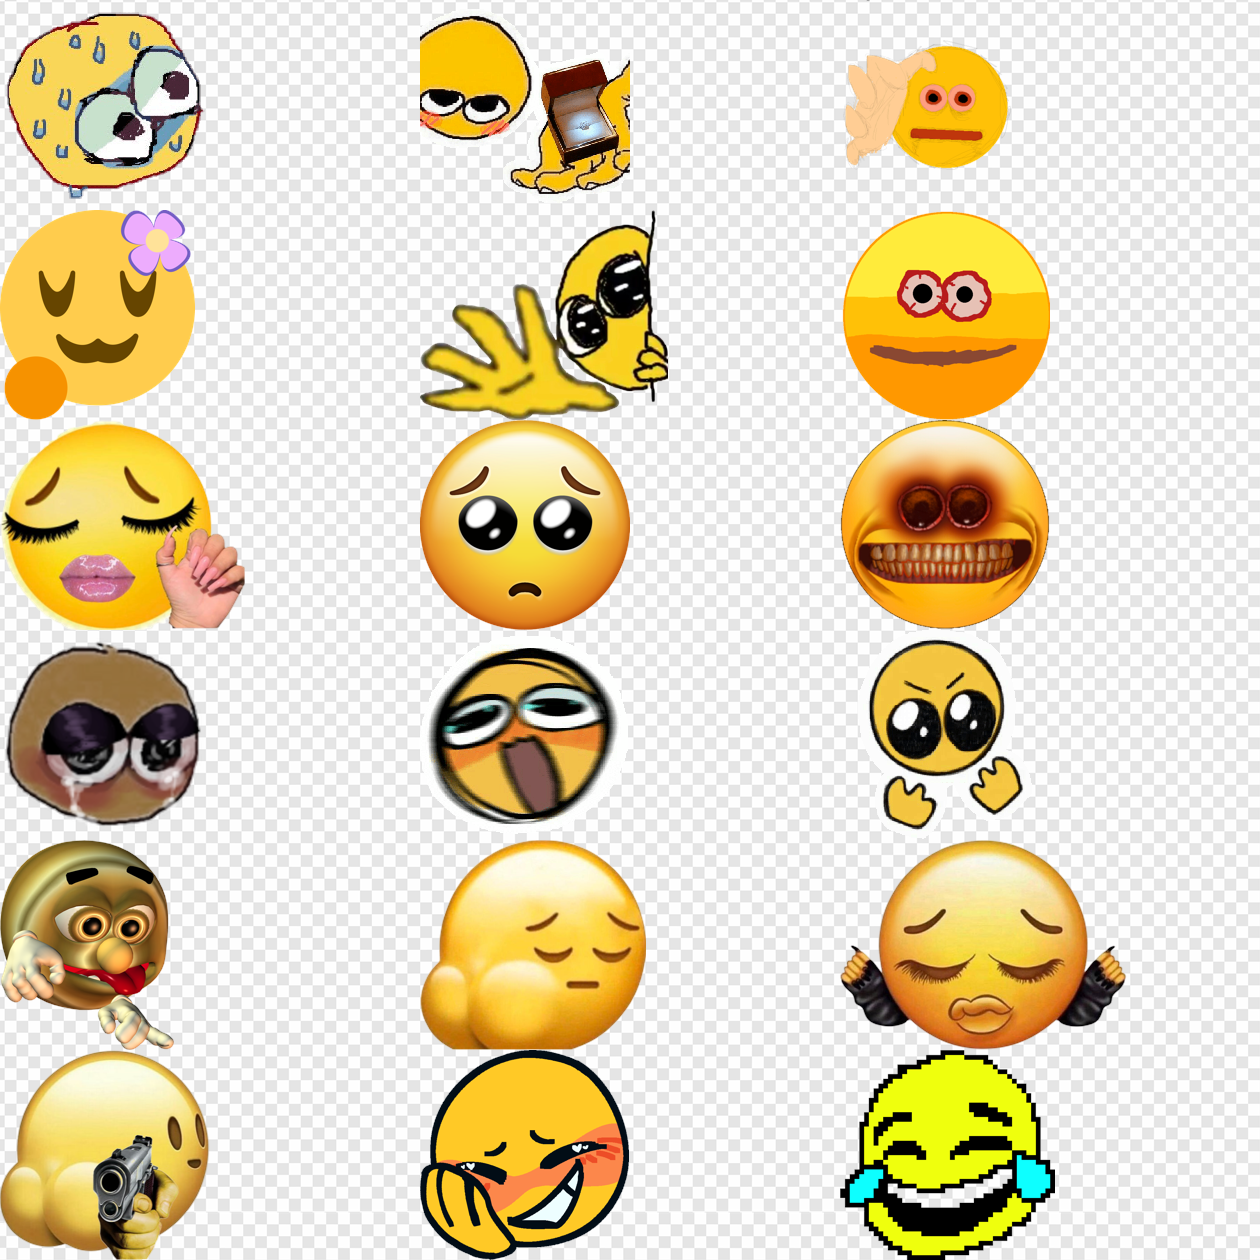 Cursed Emoji PNG Picture